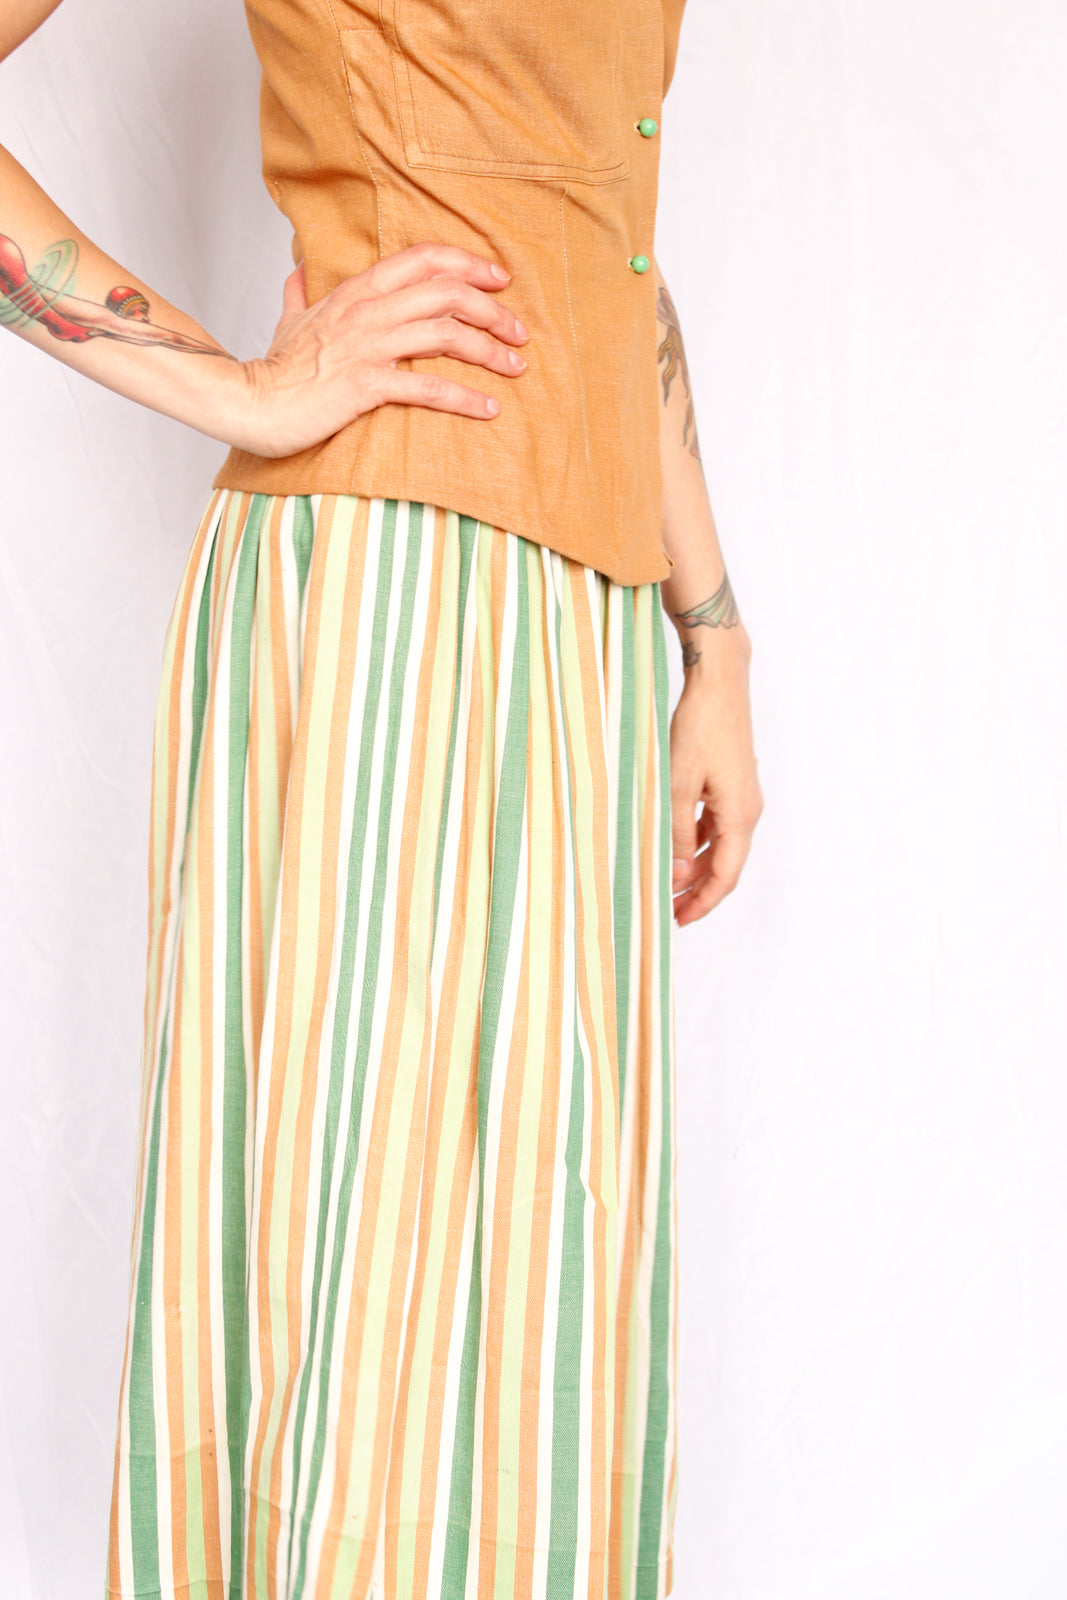 1940s Summer Blouse & Striped Skirt Set - Xsmall